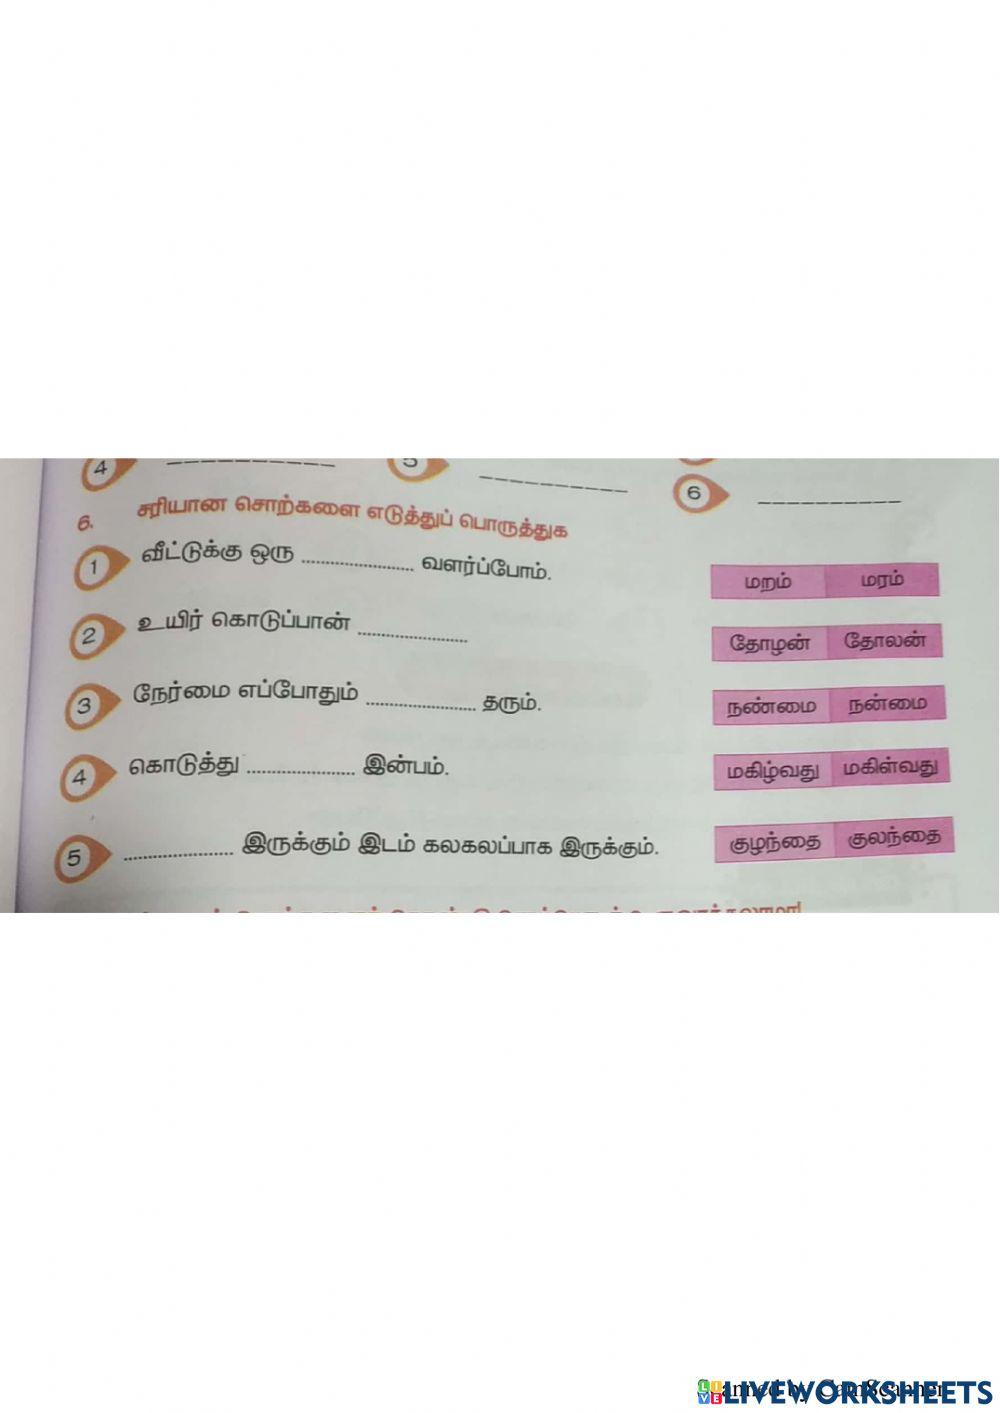 Class:5 first term : tamil worksheet : prepared by r.kumanan, senthil middle school, keppurengan patty